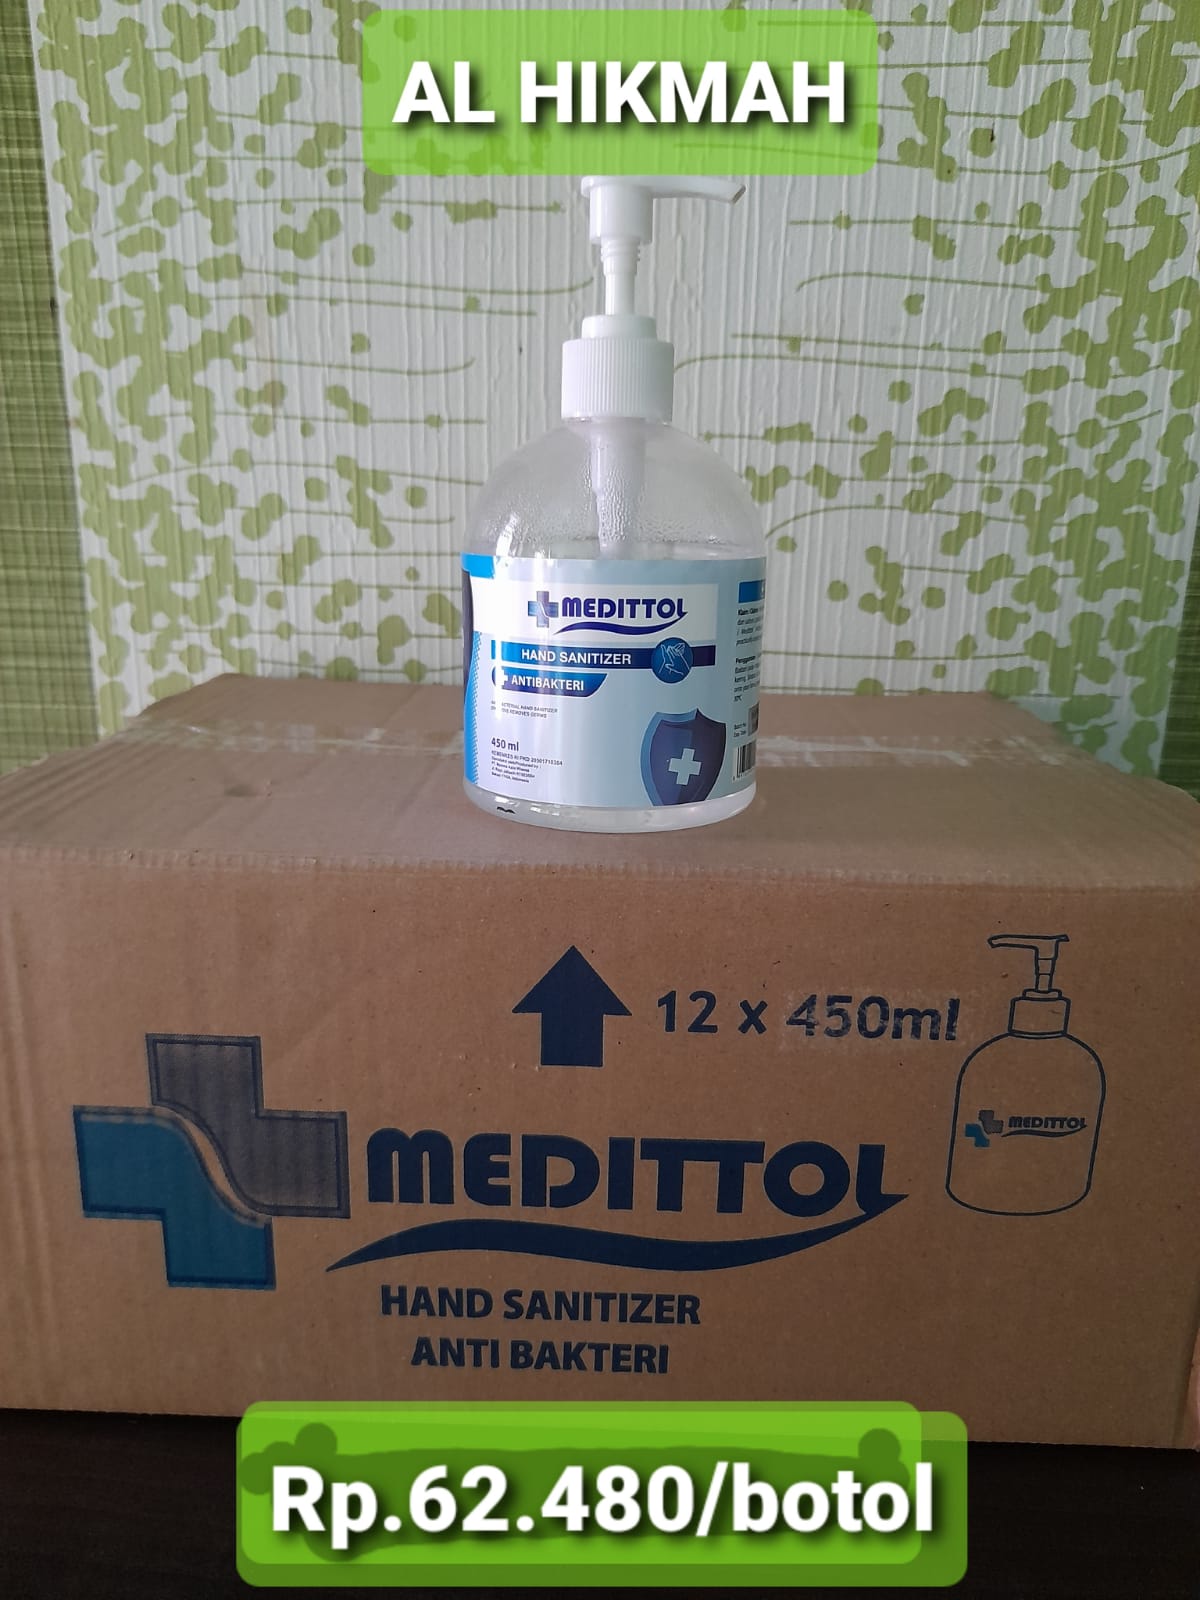 Hand Sanitizer Anti Bakteri Medittol 450ml